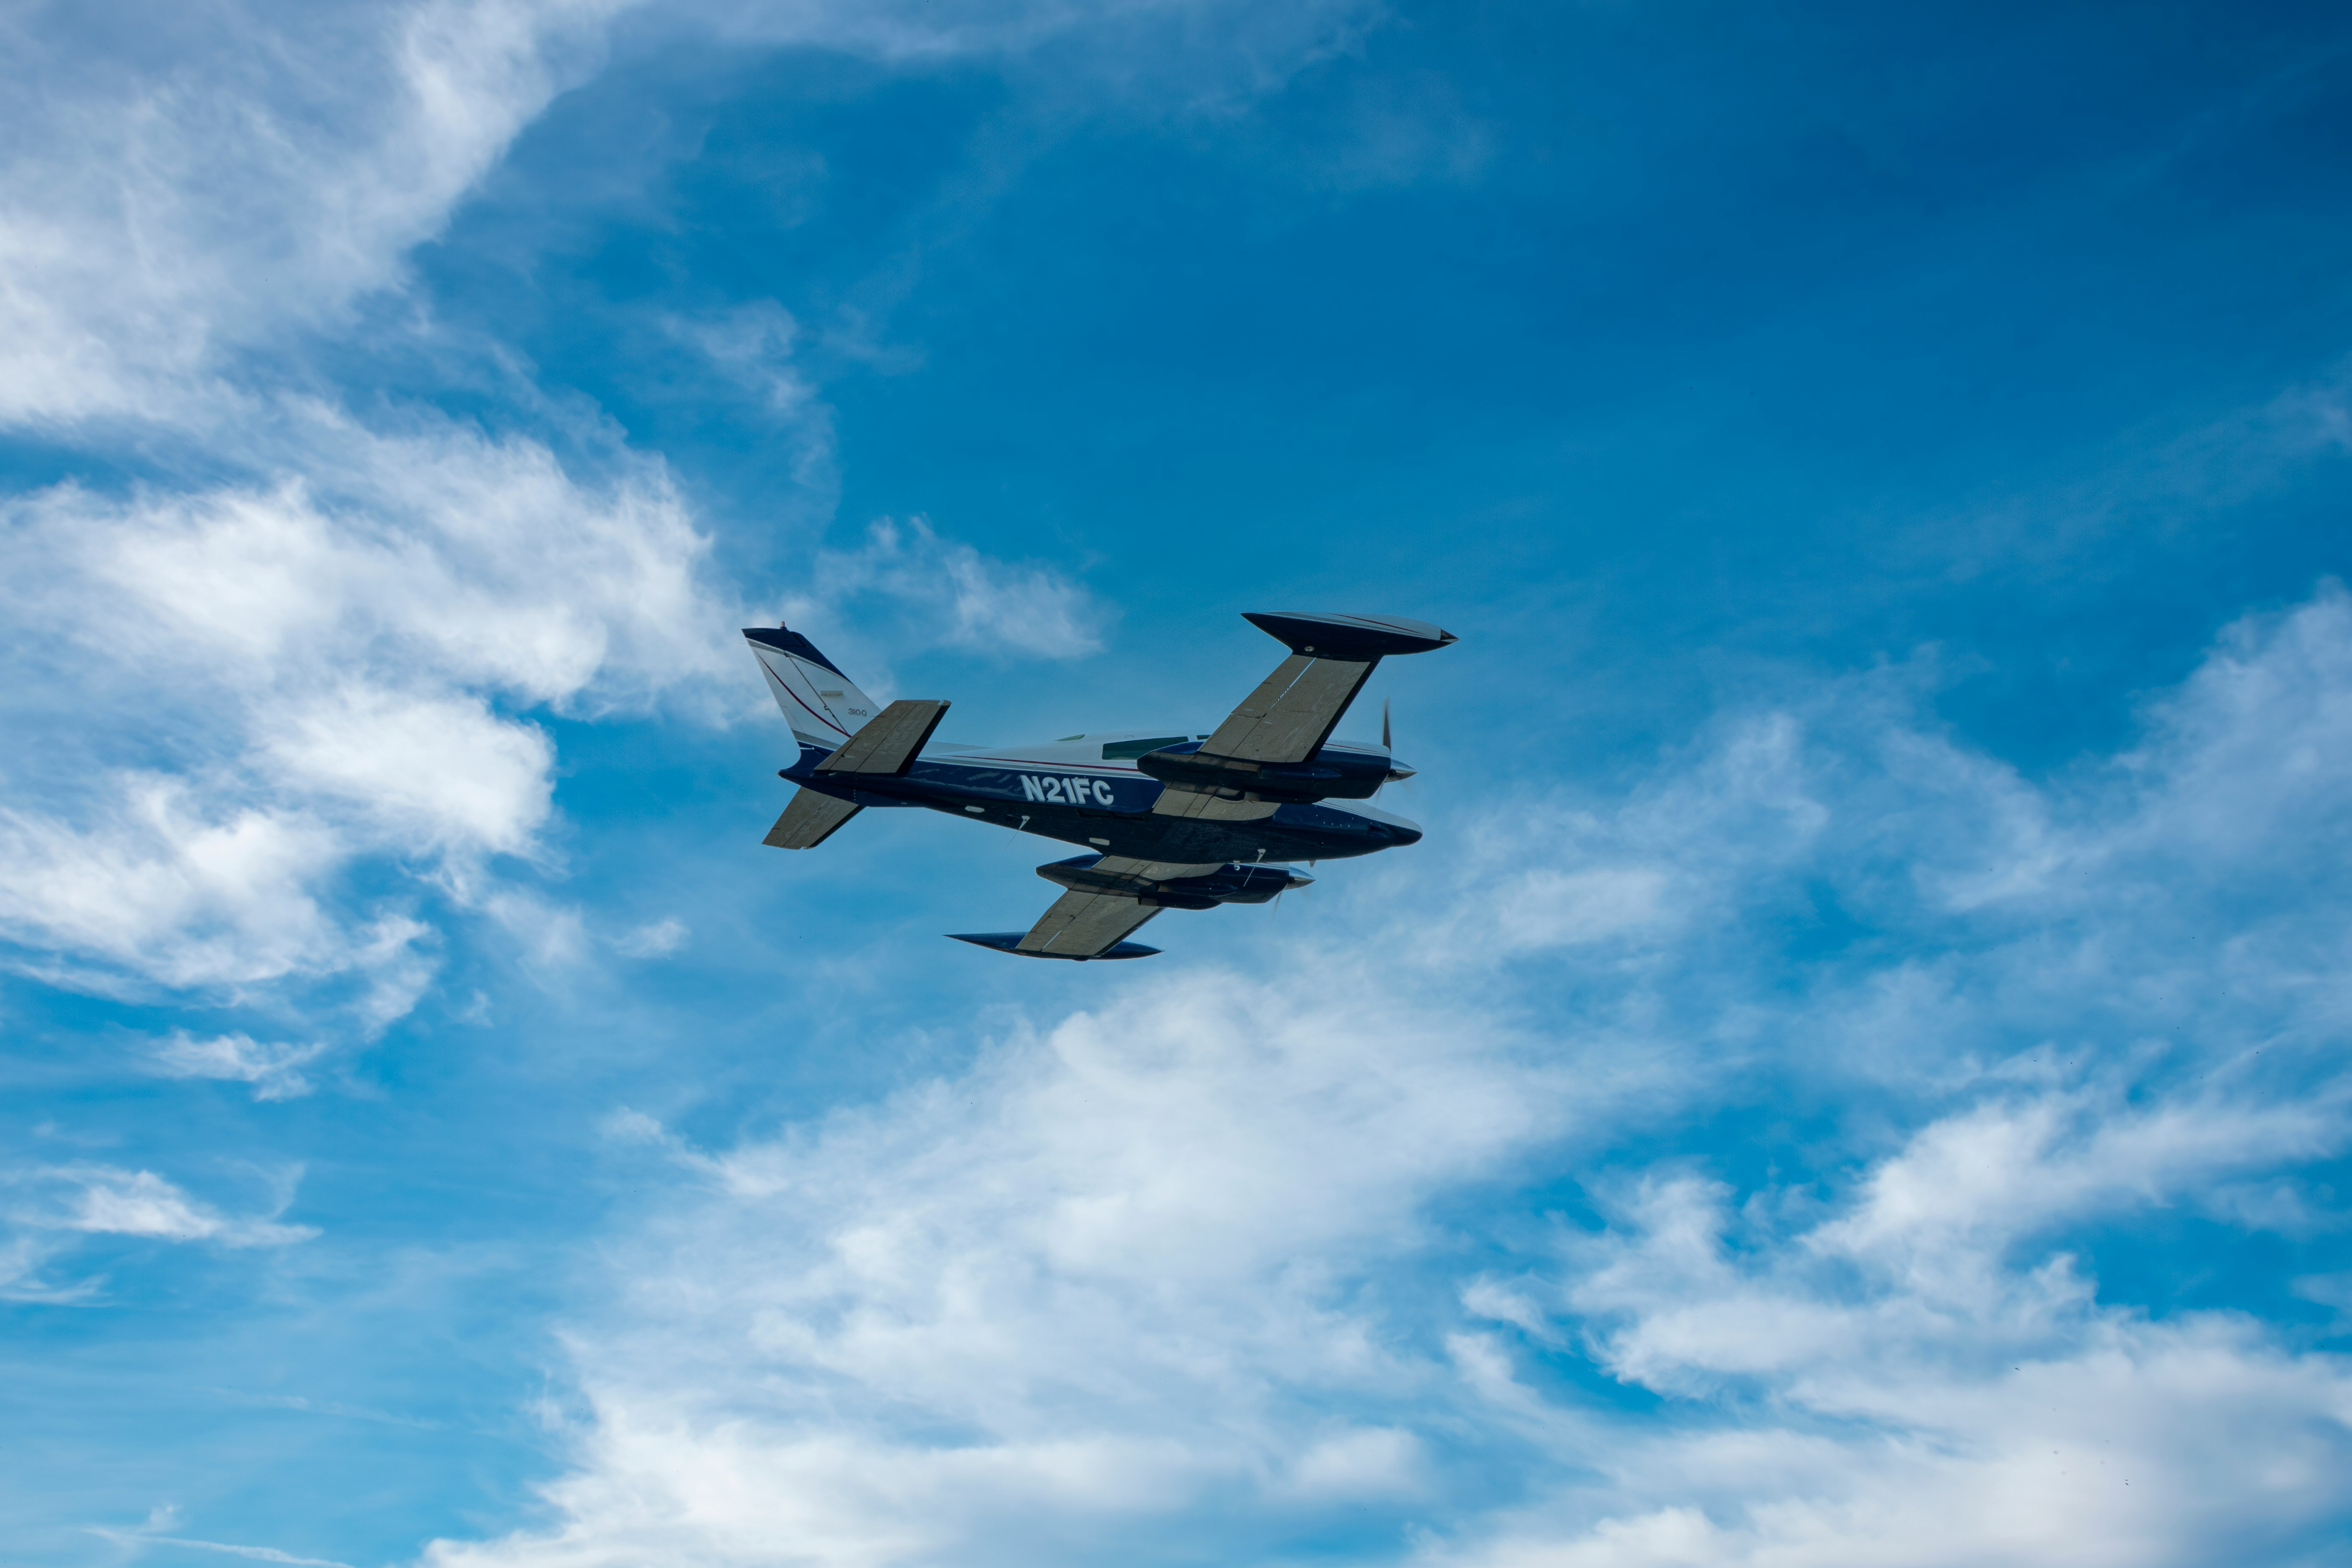 black jet plane in mid air under blue sky during daytime